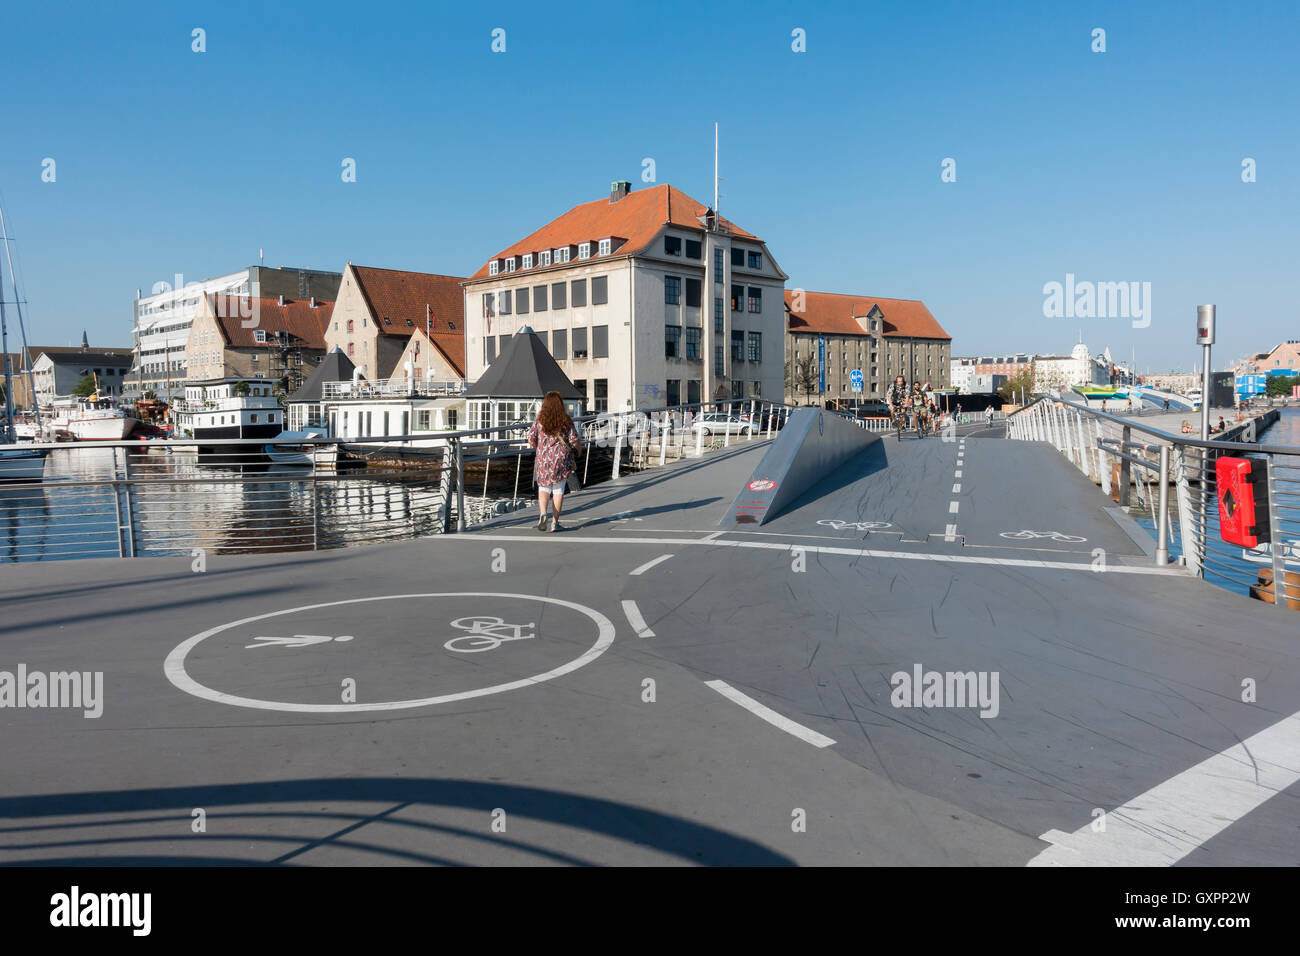 The round about in the centre of Trangravsbroen (The Butterfly Bridge) in Christianshavn Copenhagen Denmark Stock Photo